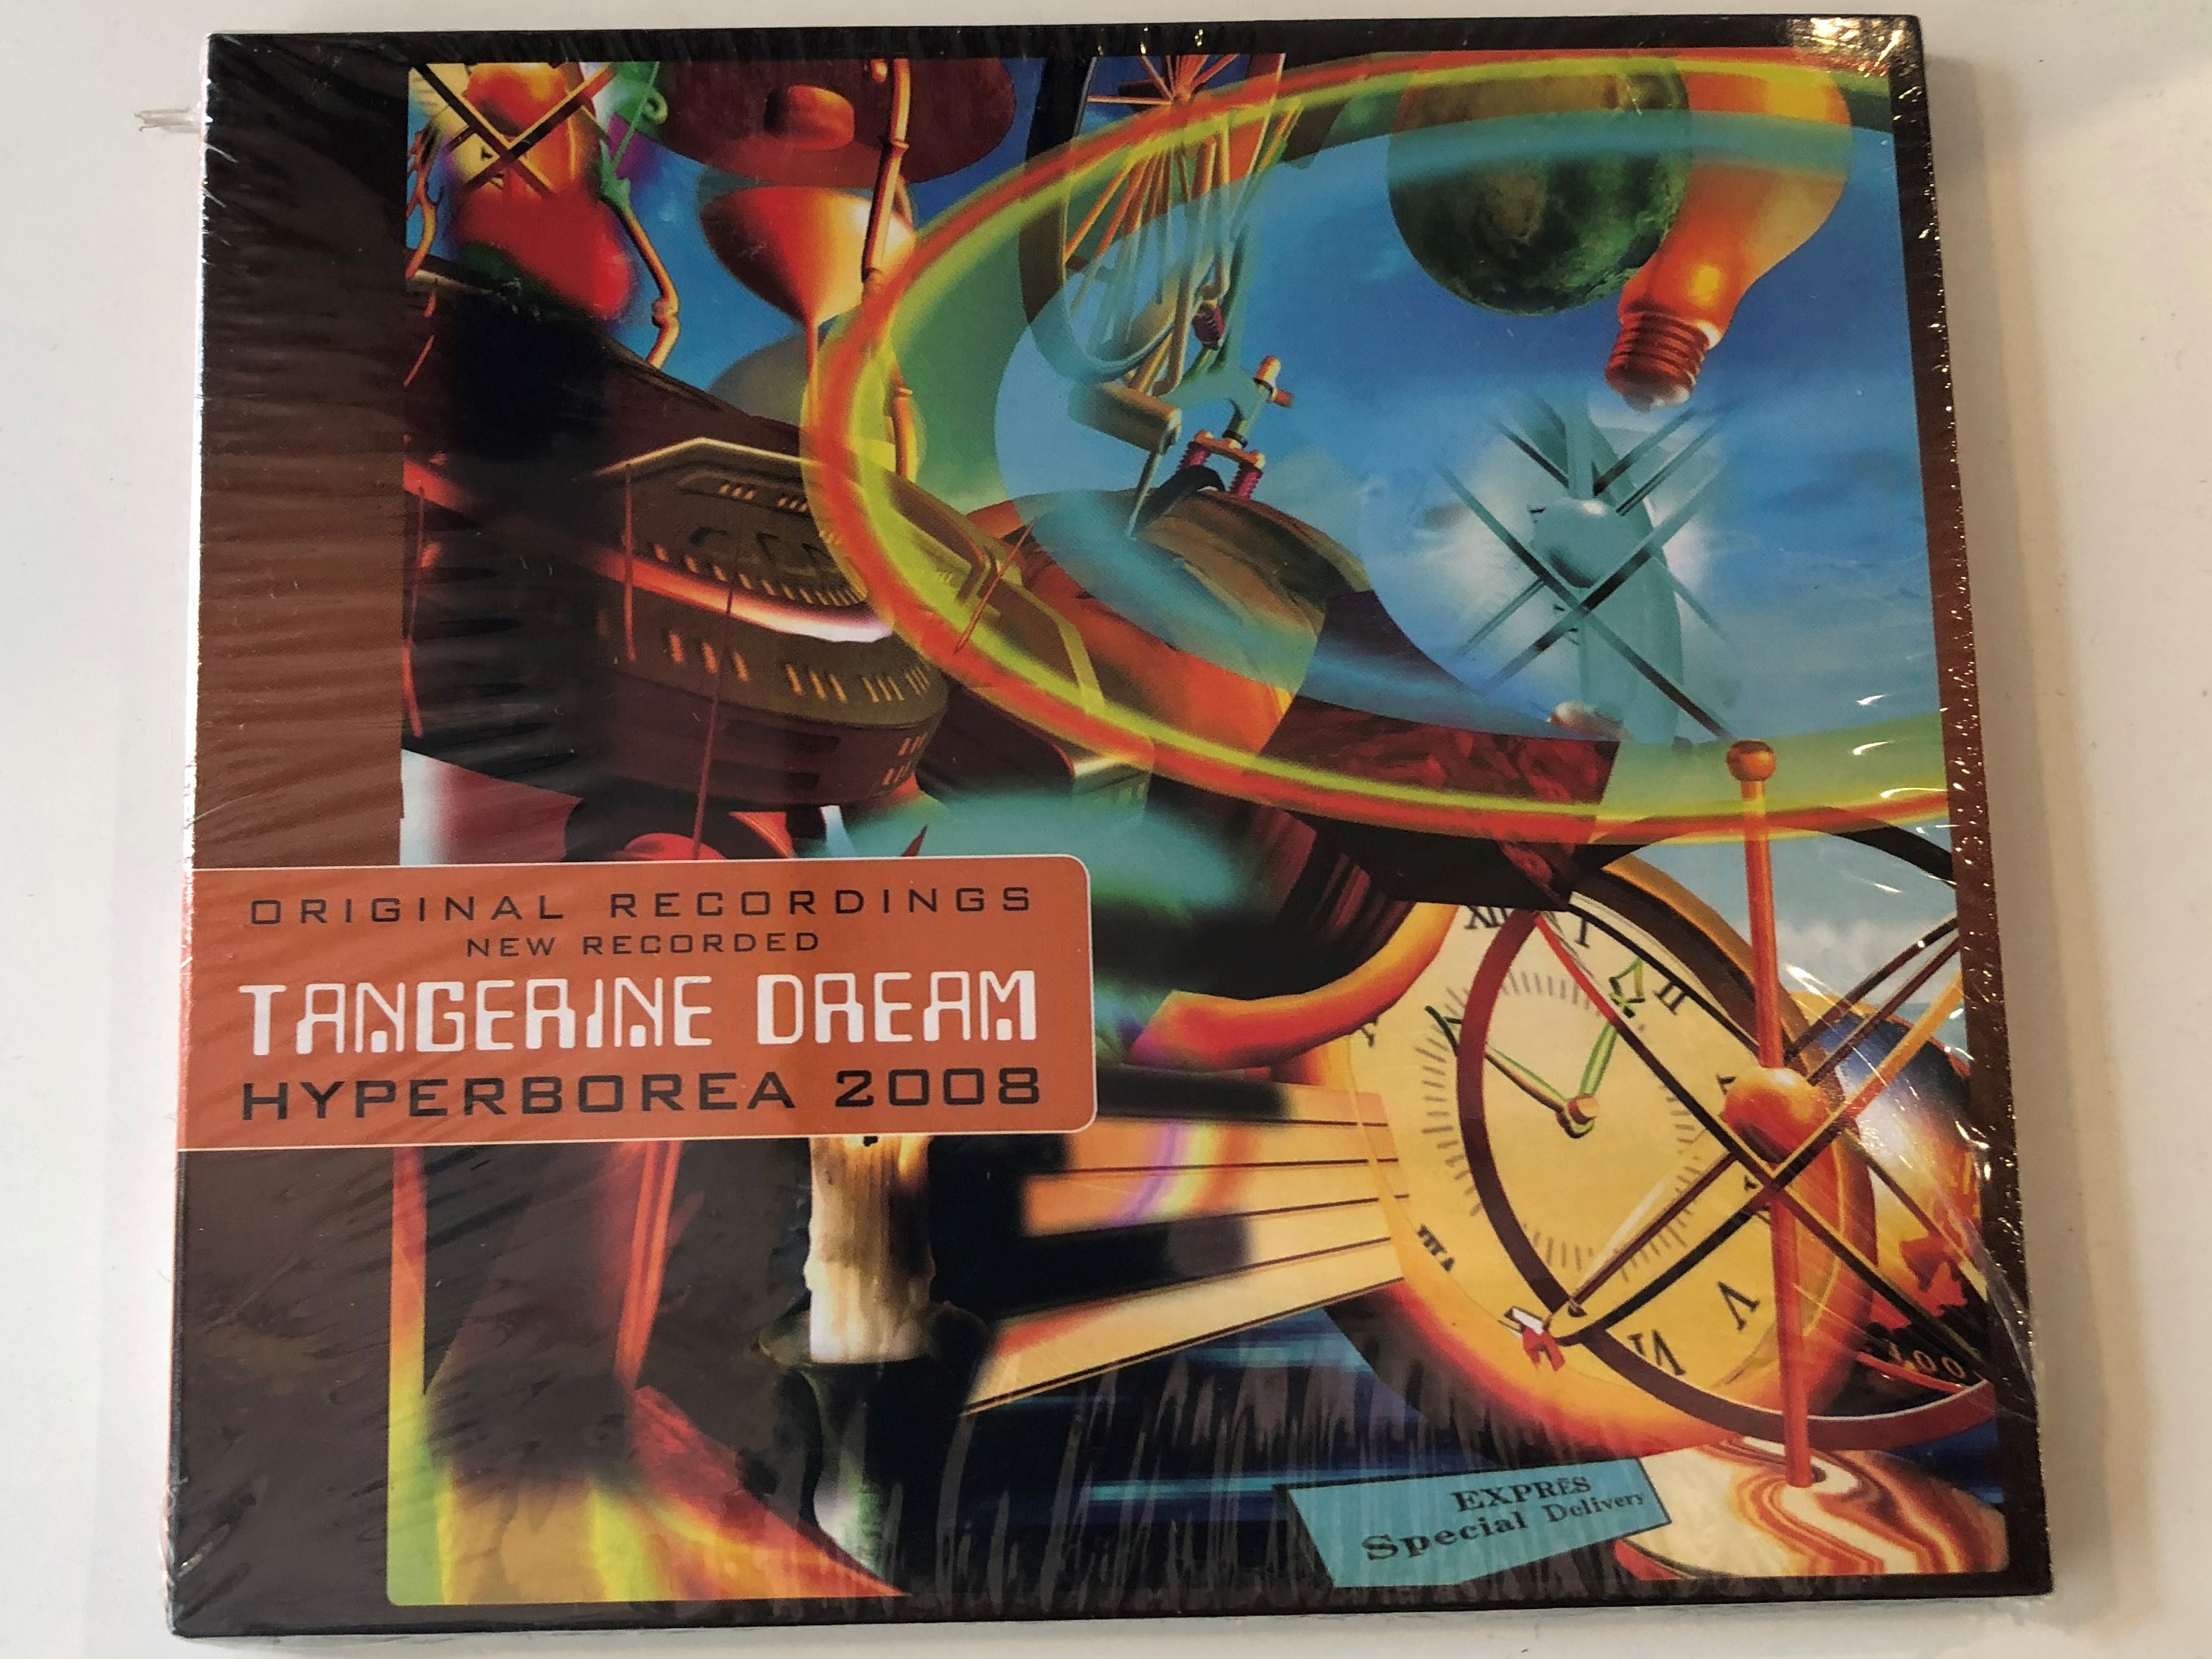 tangerine-dream-hyperborea-2008-original-recordings-new-recorded-documents-audio-cd-stereo-232634-1-.jpg